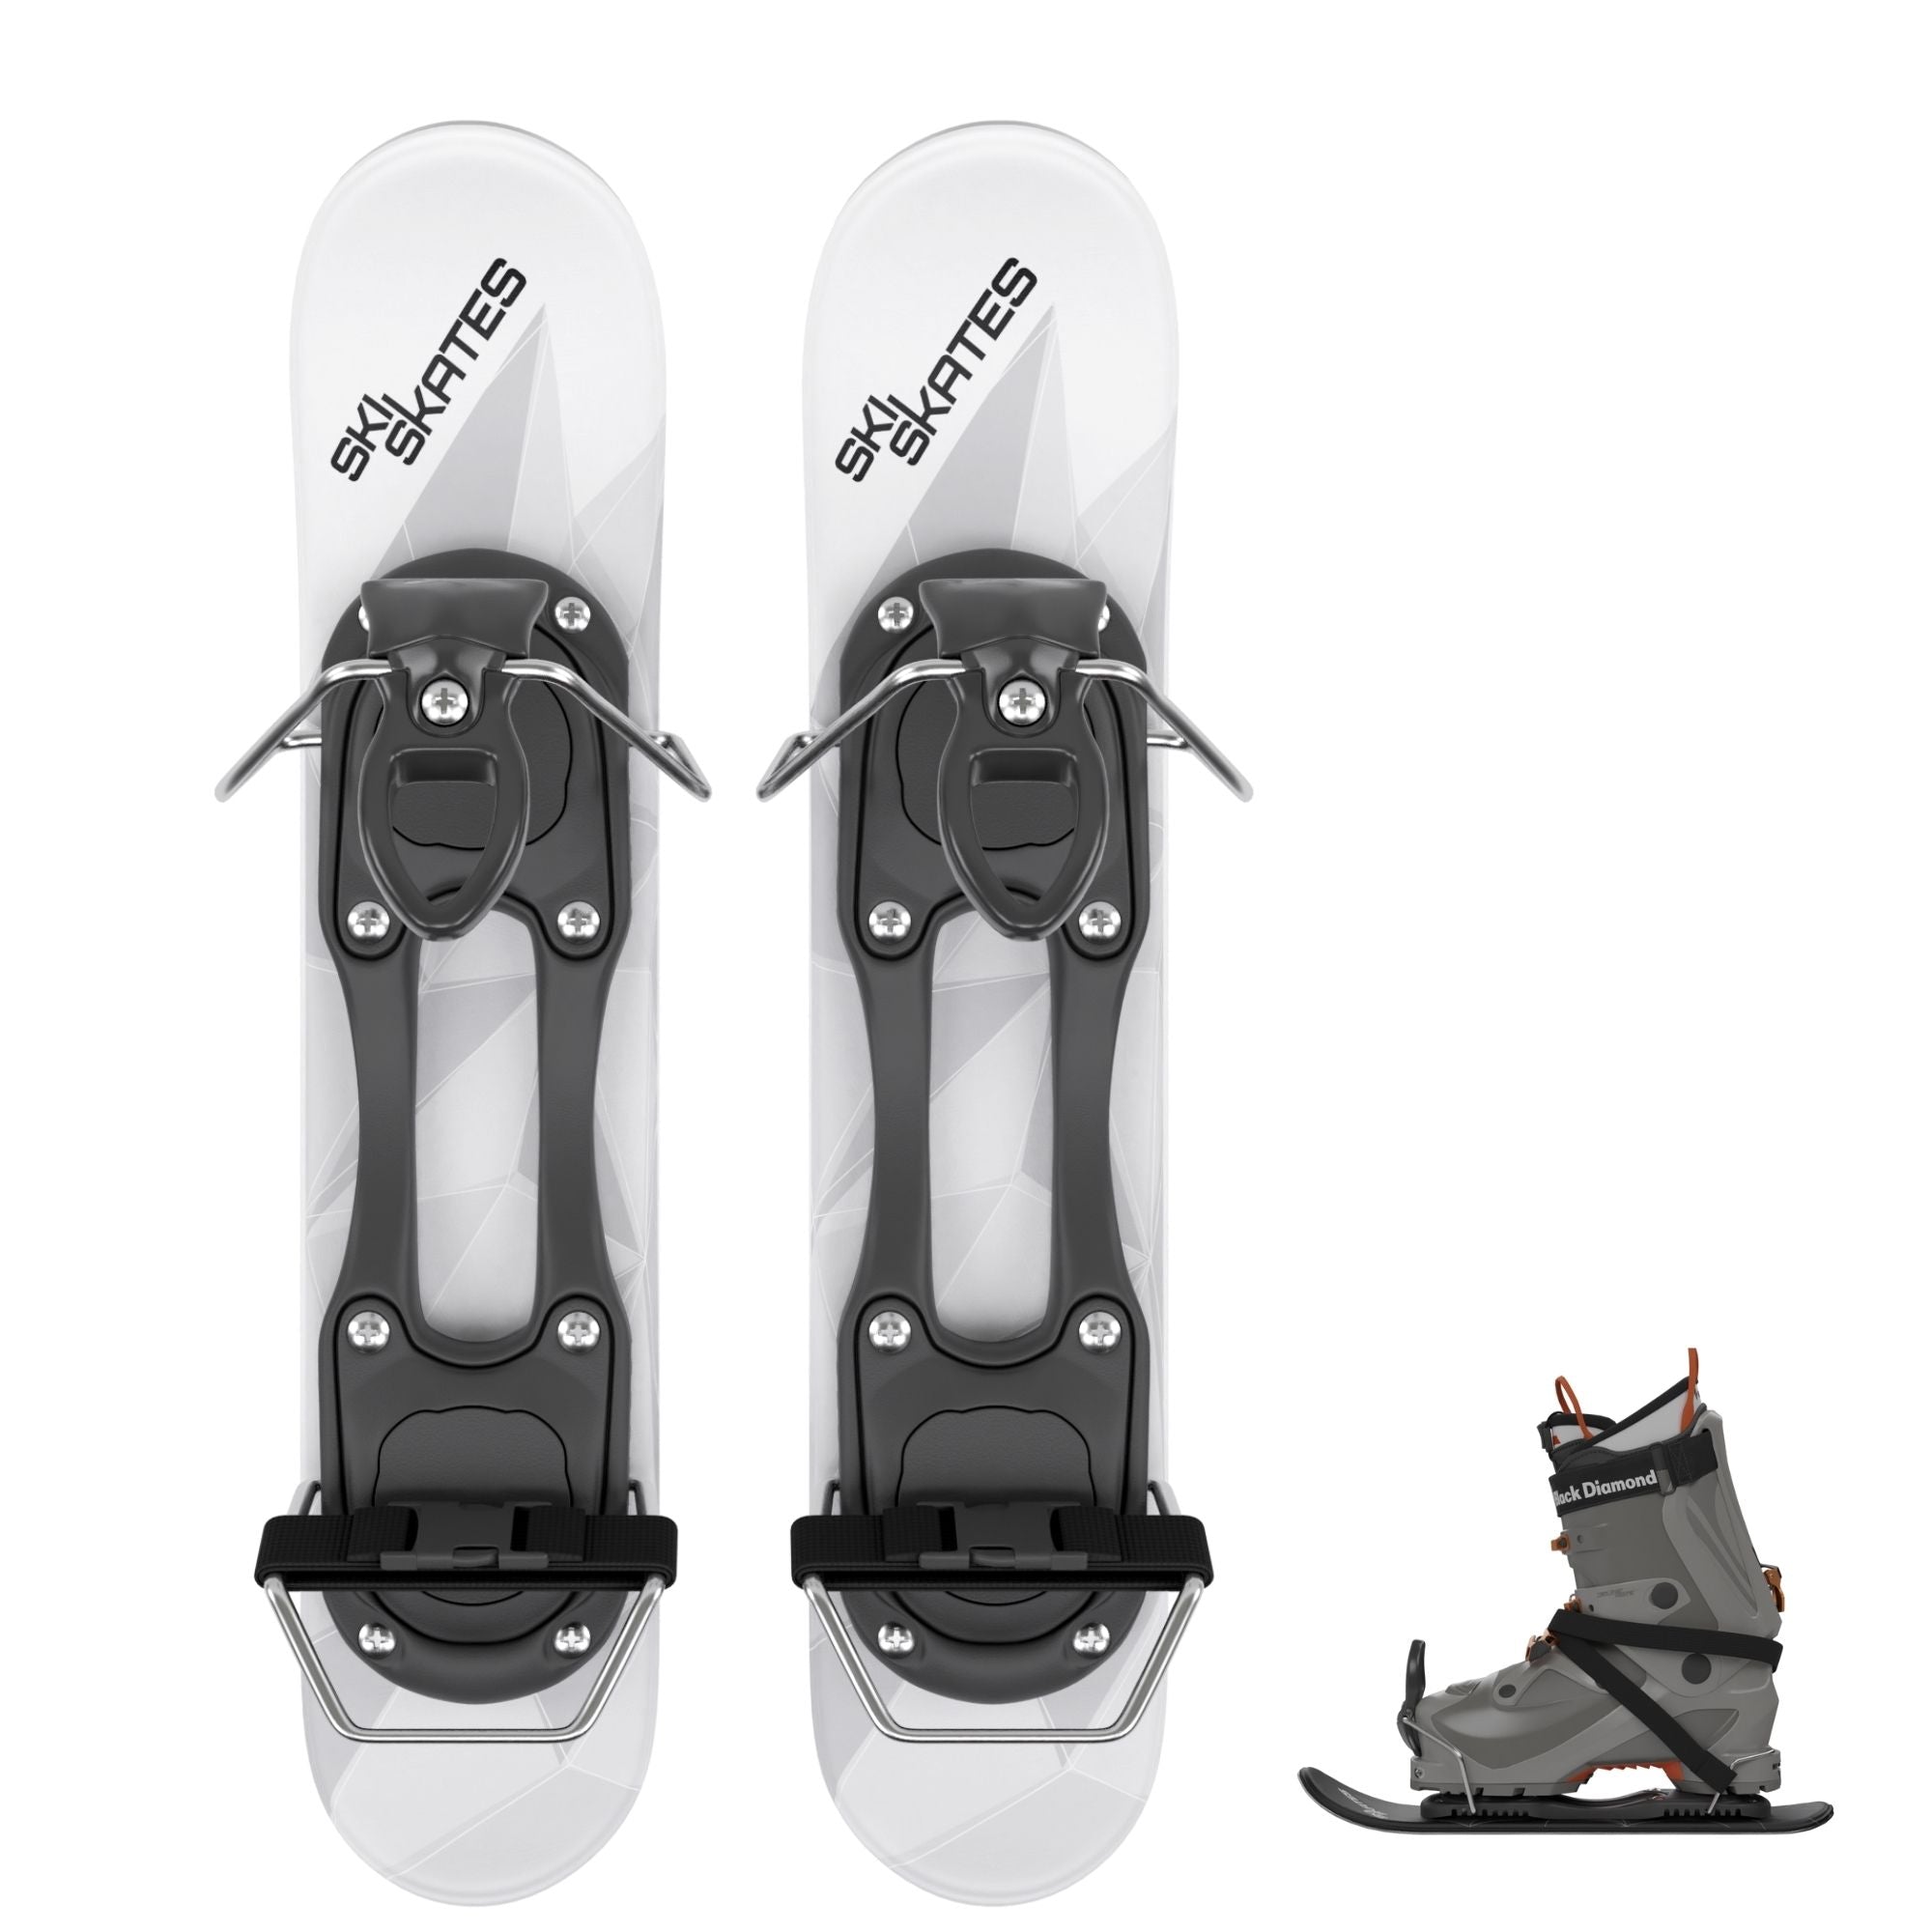 Skiskates - Mini Ski Skates | Ski Boots Model - Official Product